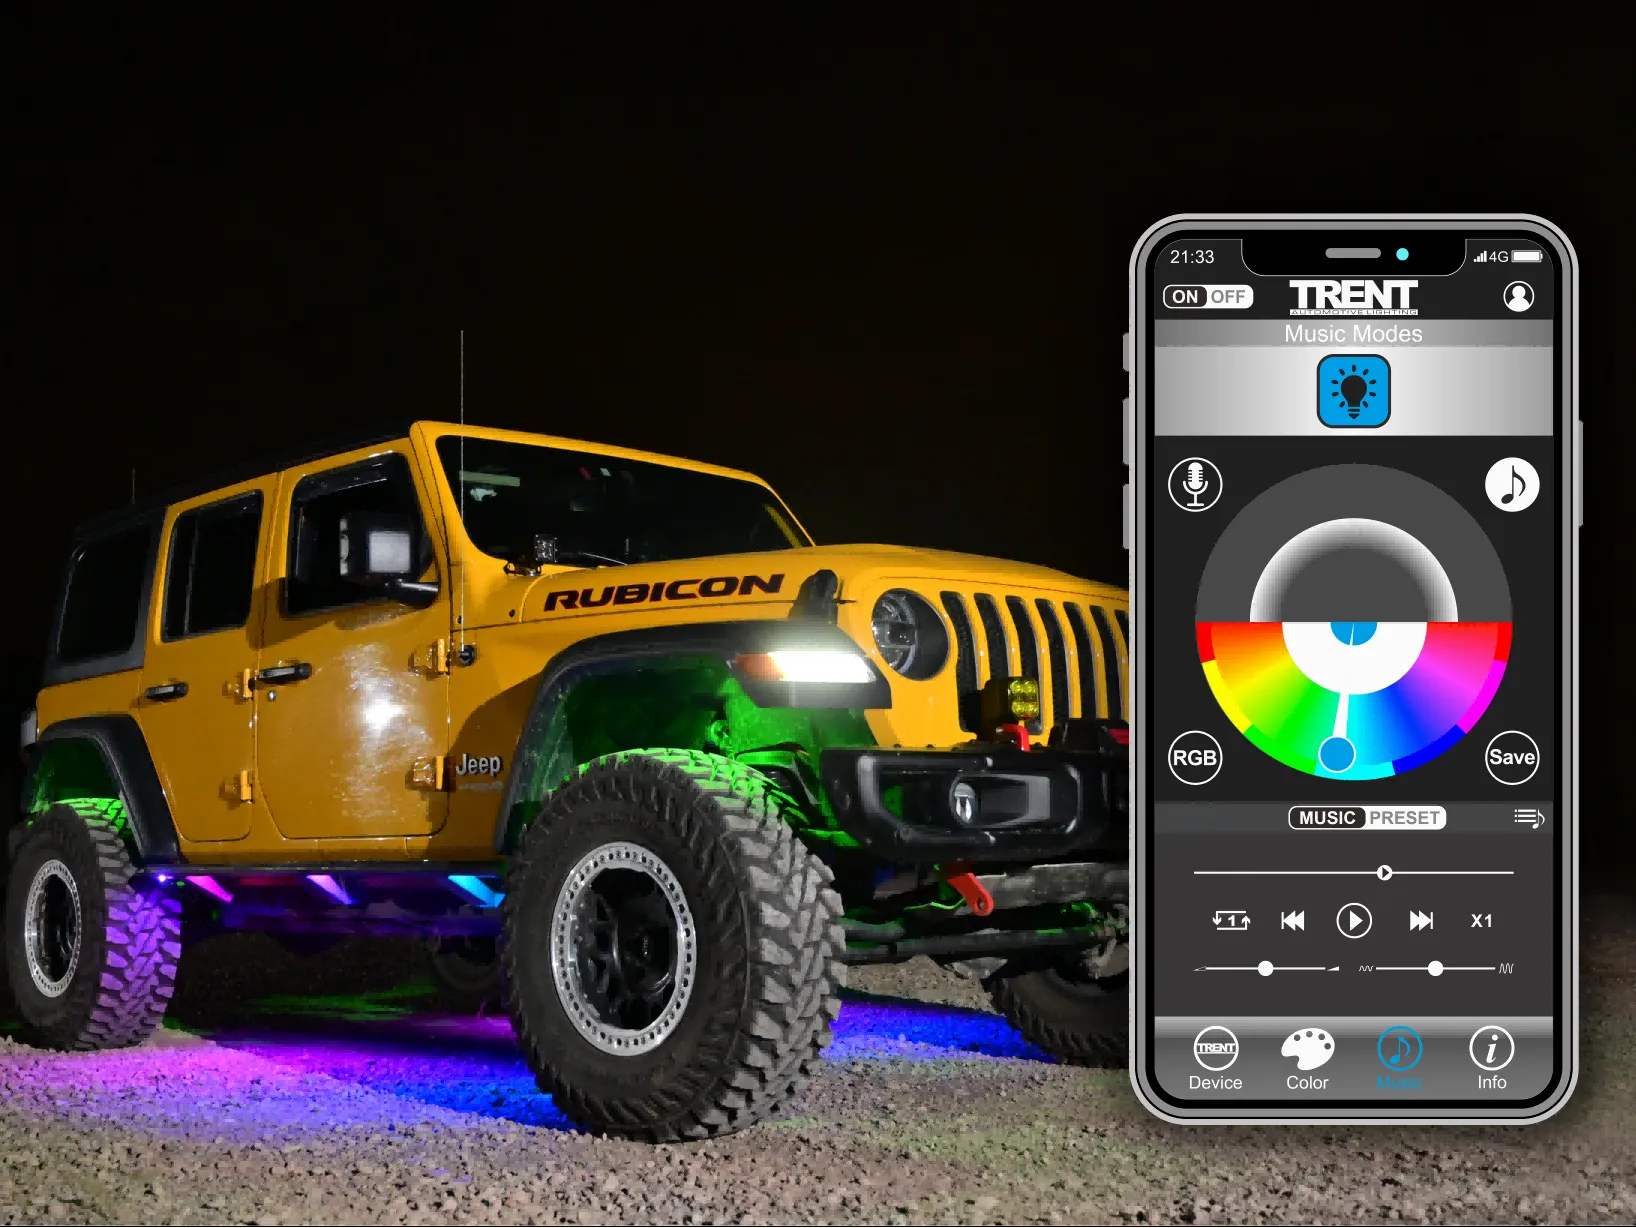 underglow lighting kit, App ambient lighting, app control lighting for car, underbody light kit